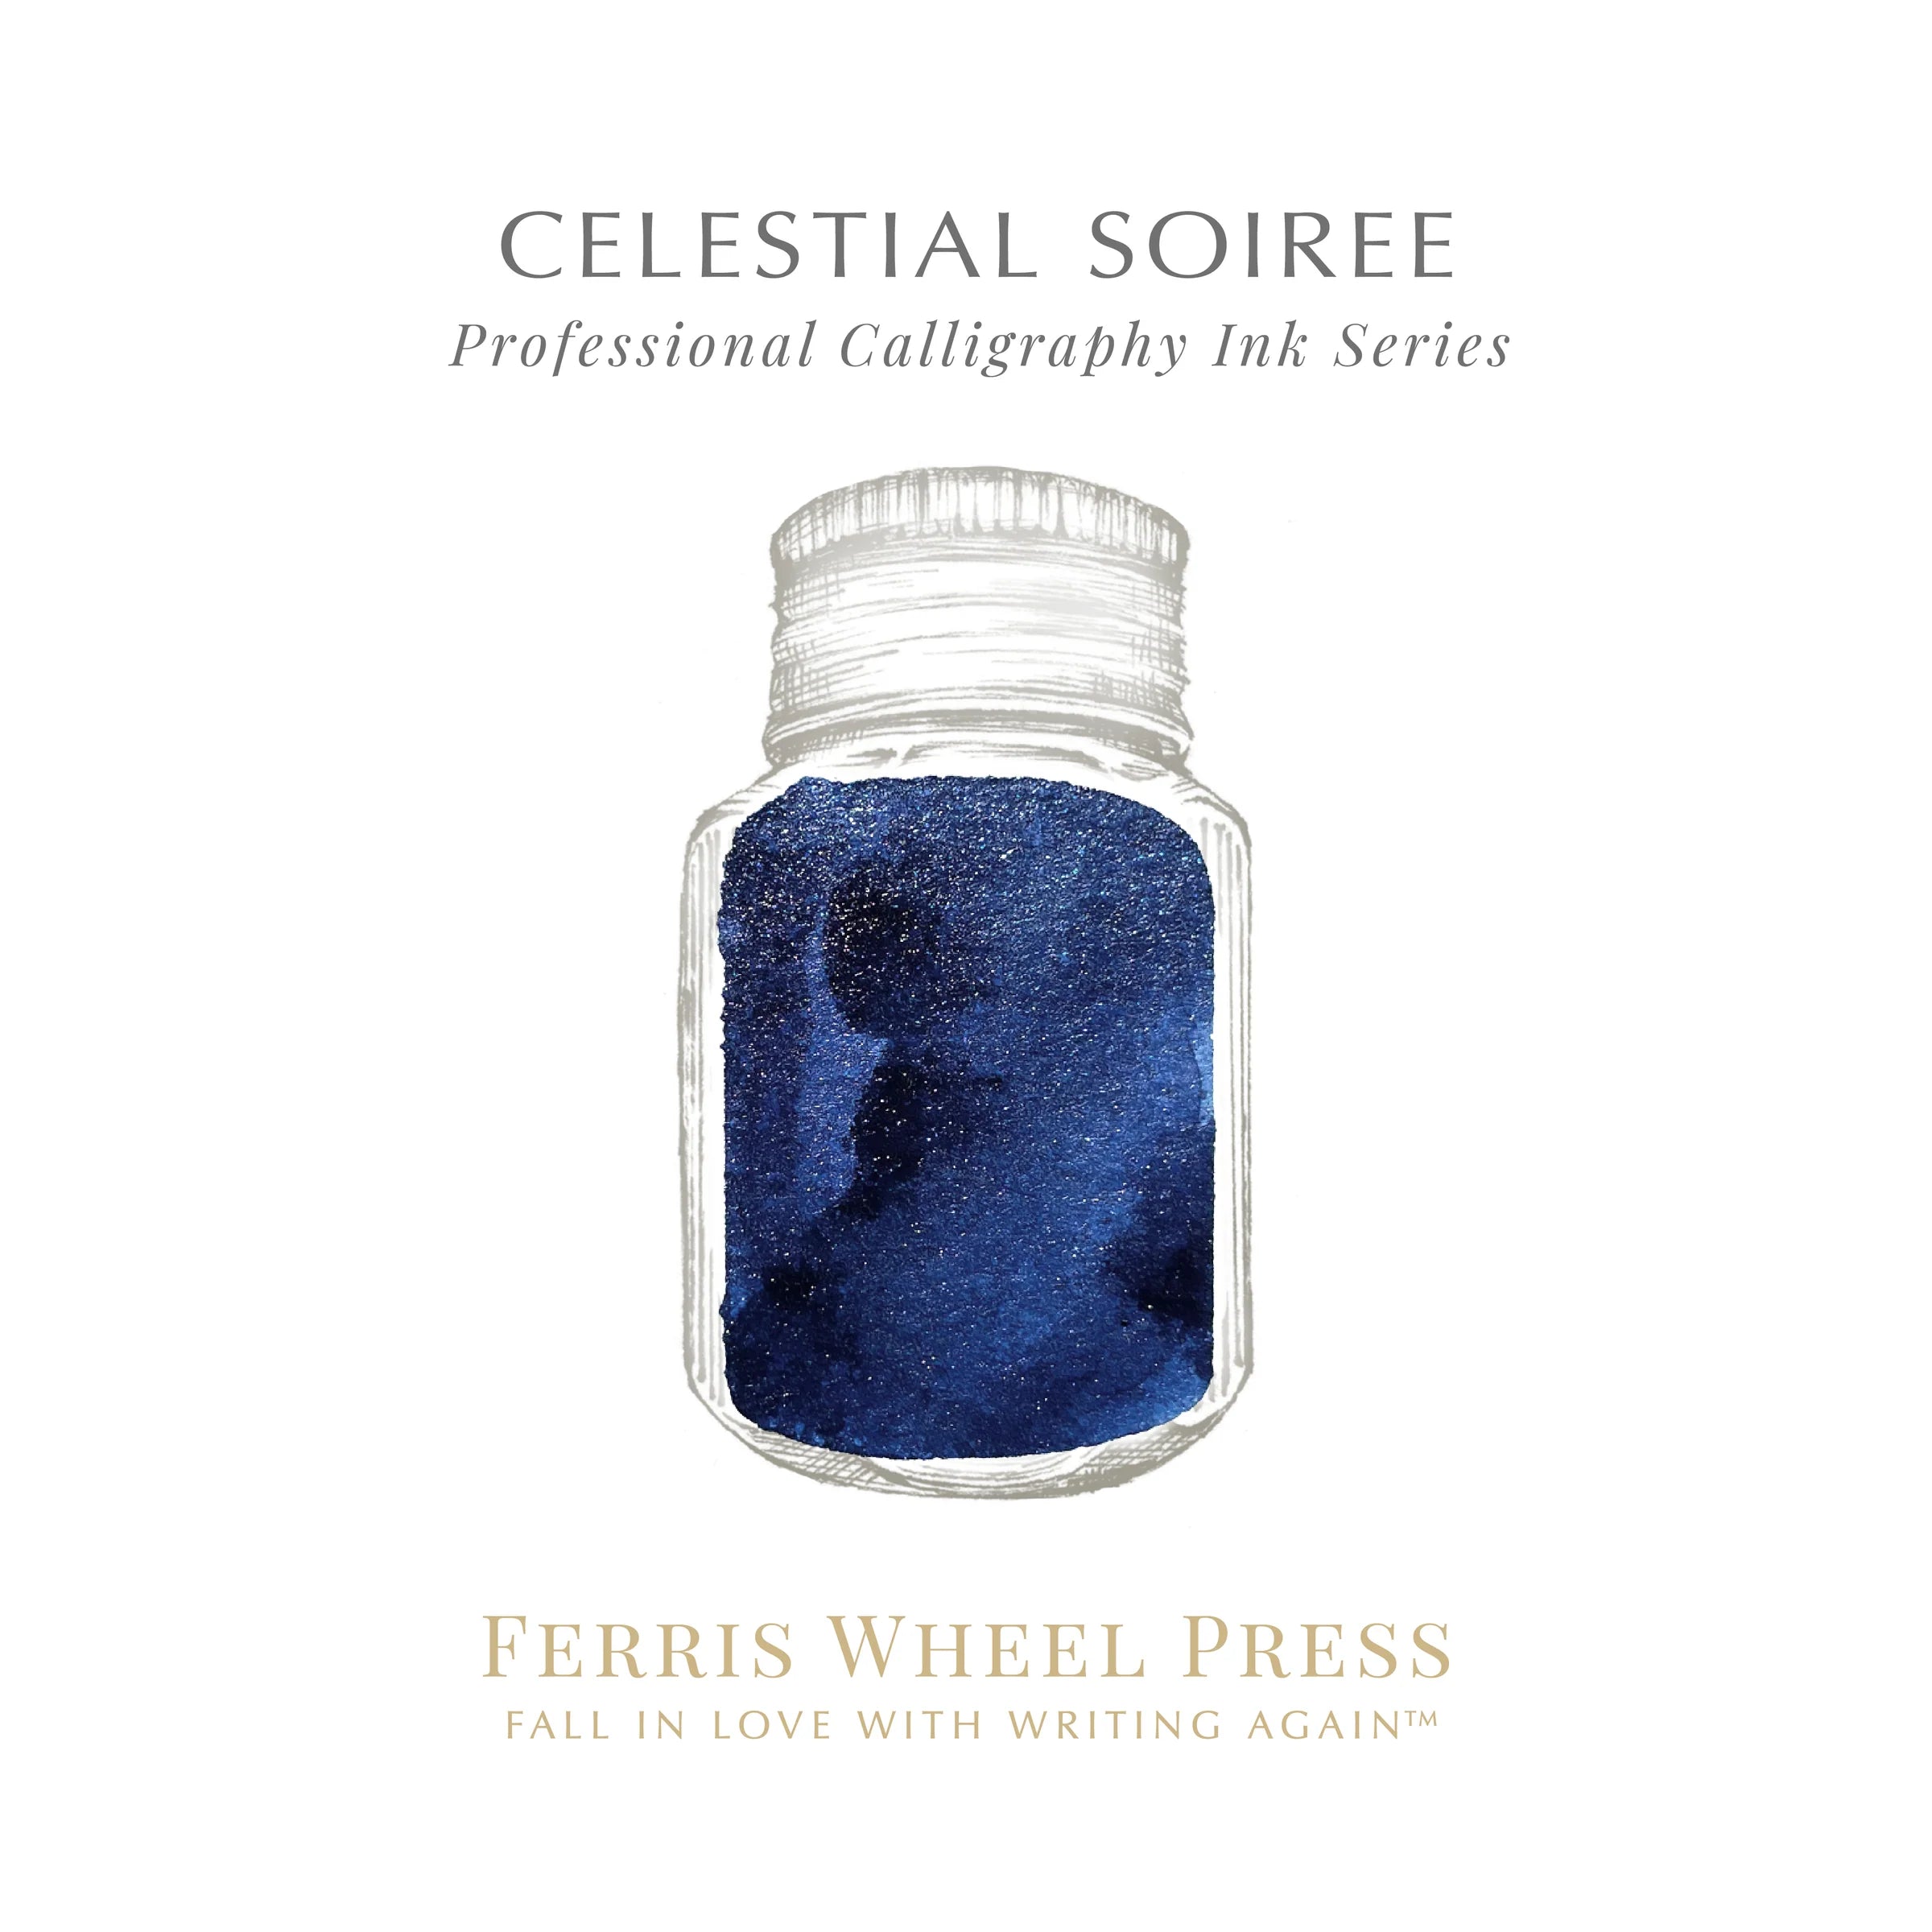 FERRIS WHEEL PRESS Calligraphy Ink 28ml Celestial Soiree